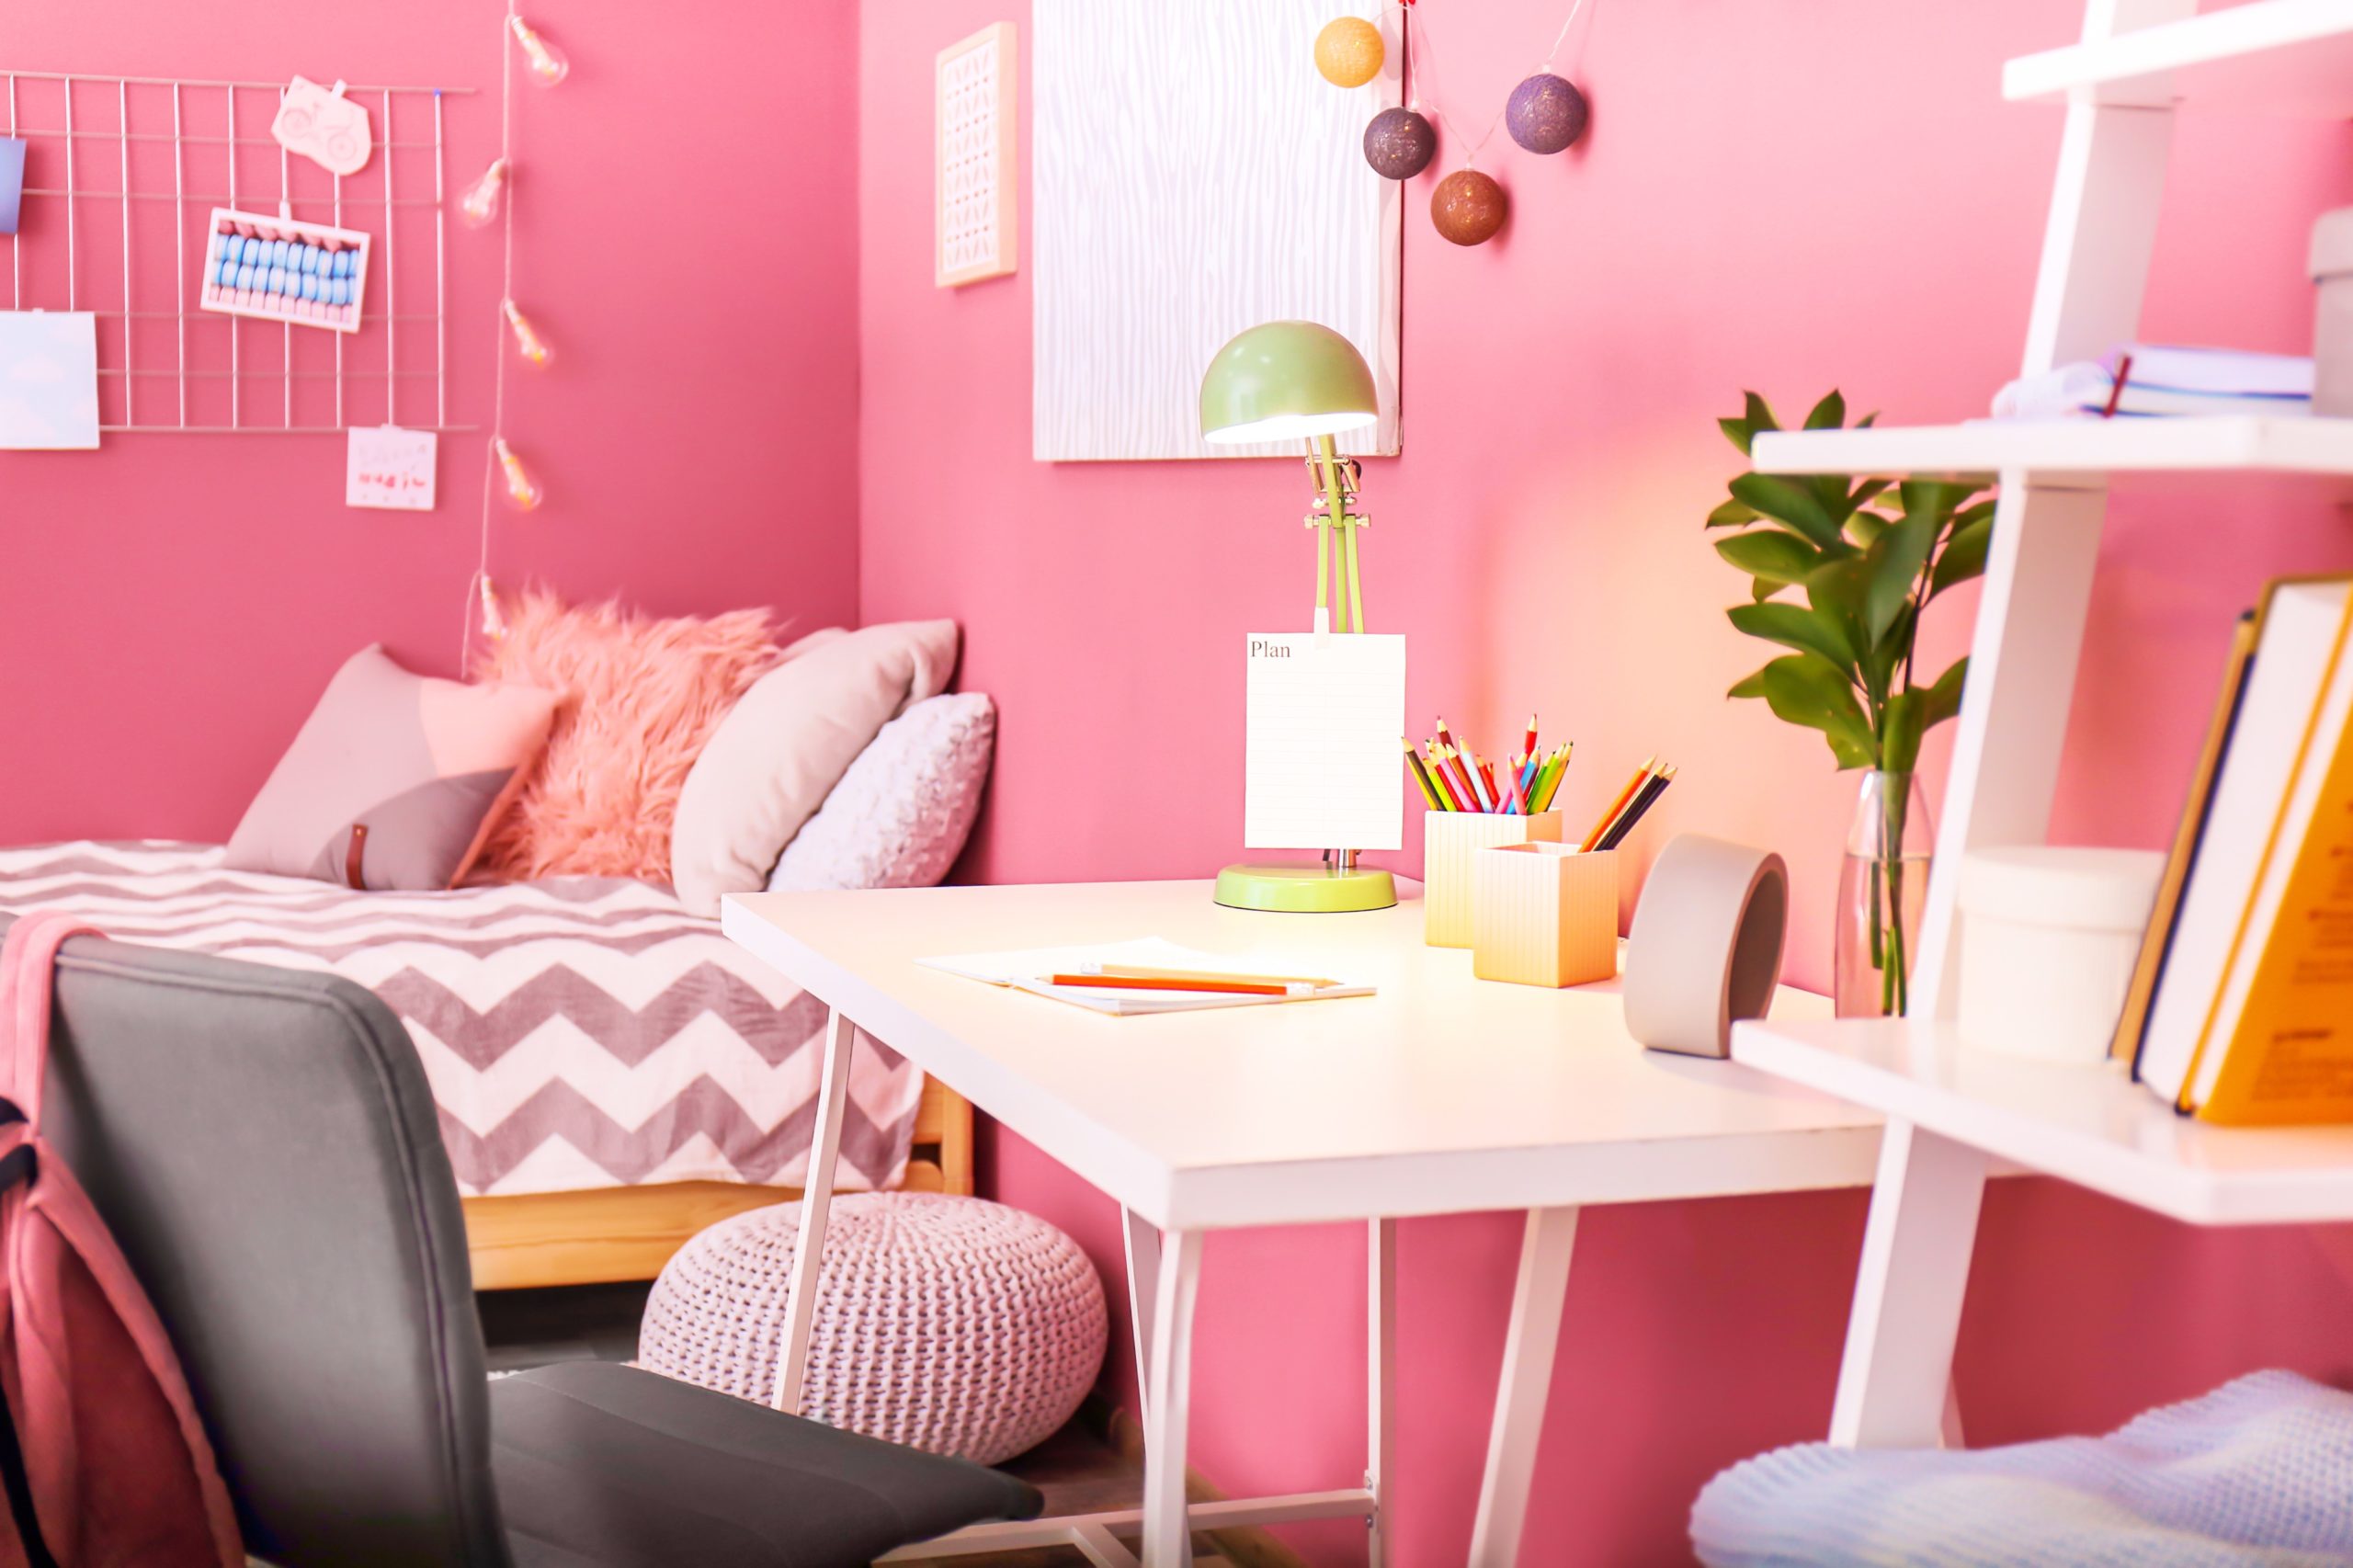 <img src="brightjpg" alt="bright fuschia pink bedroom"/> 